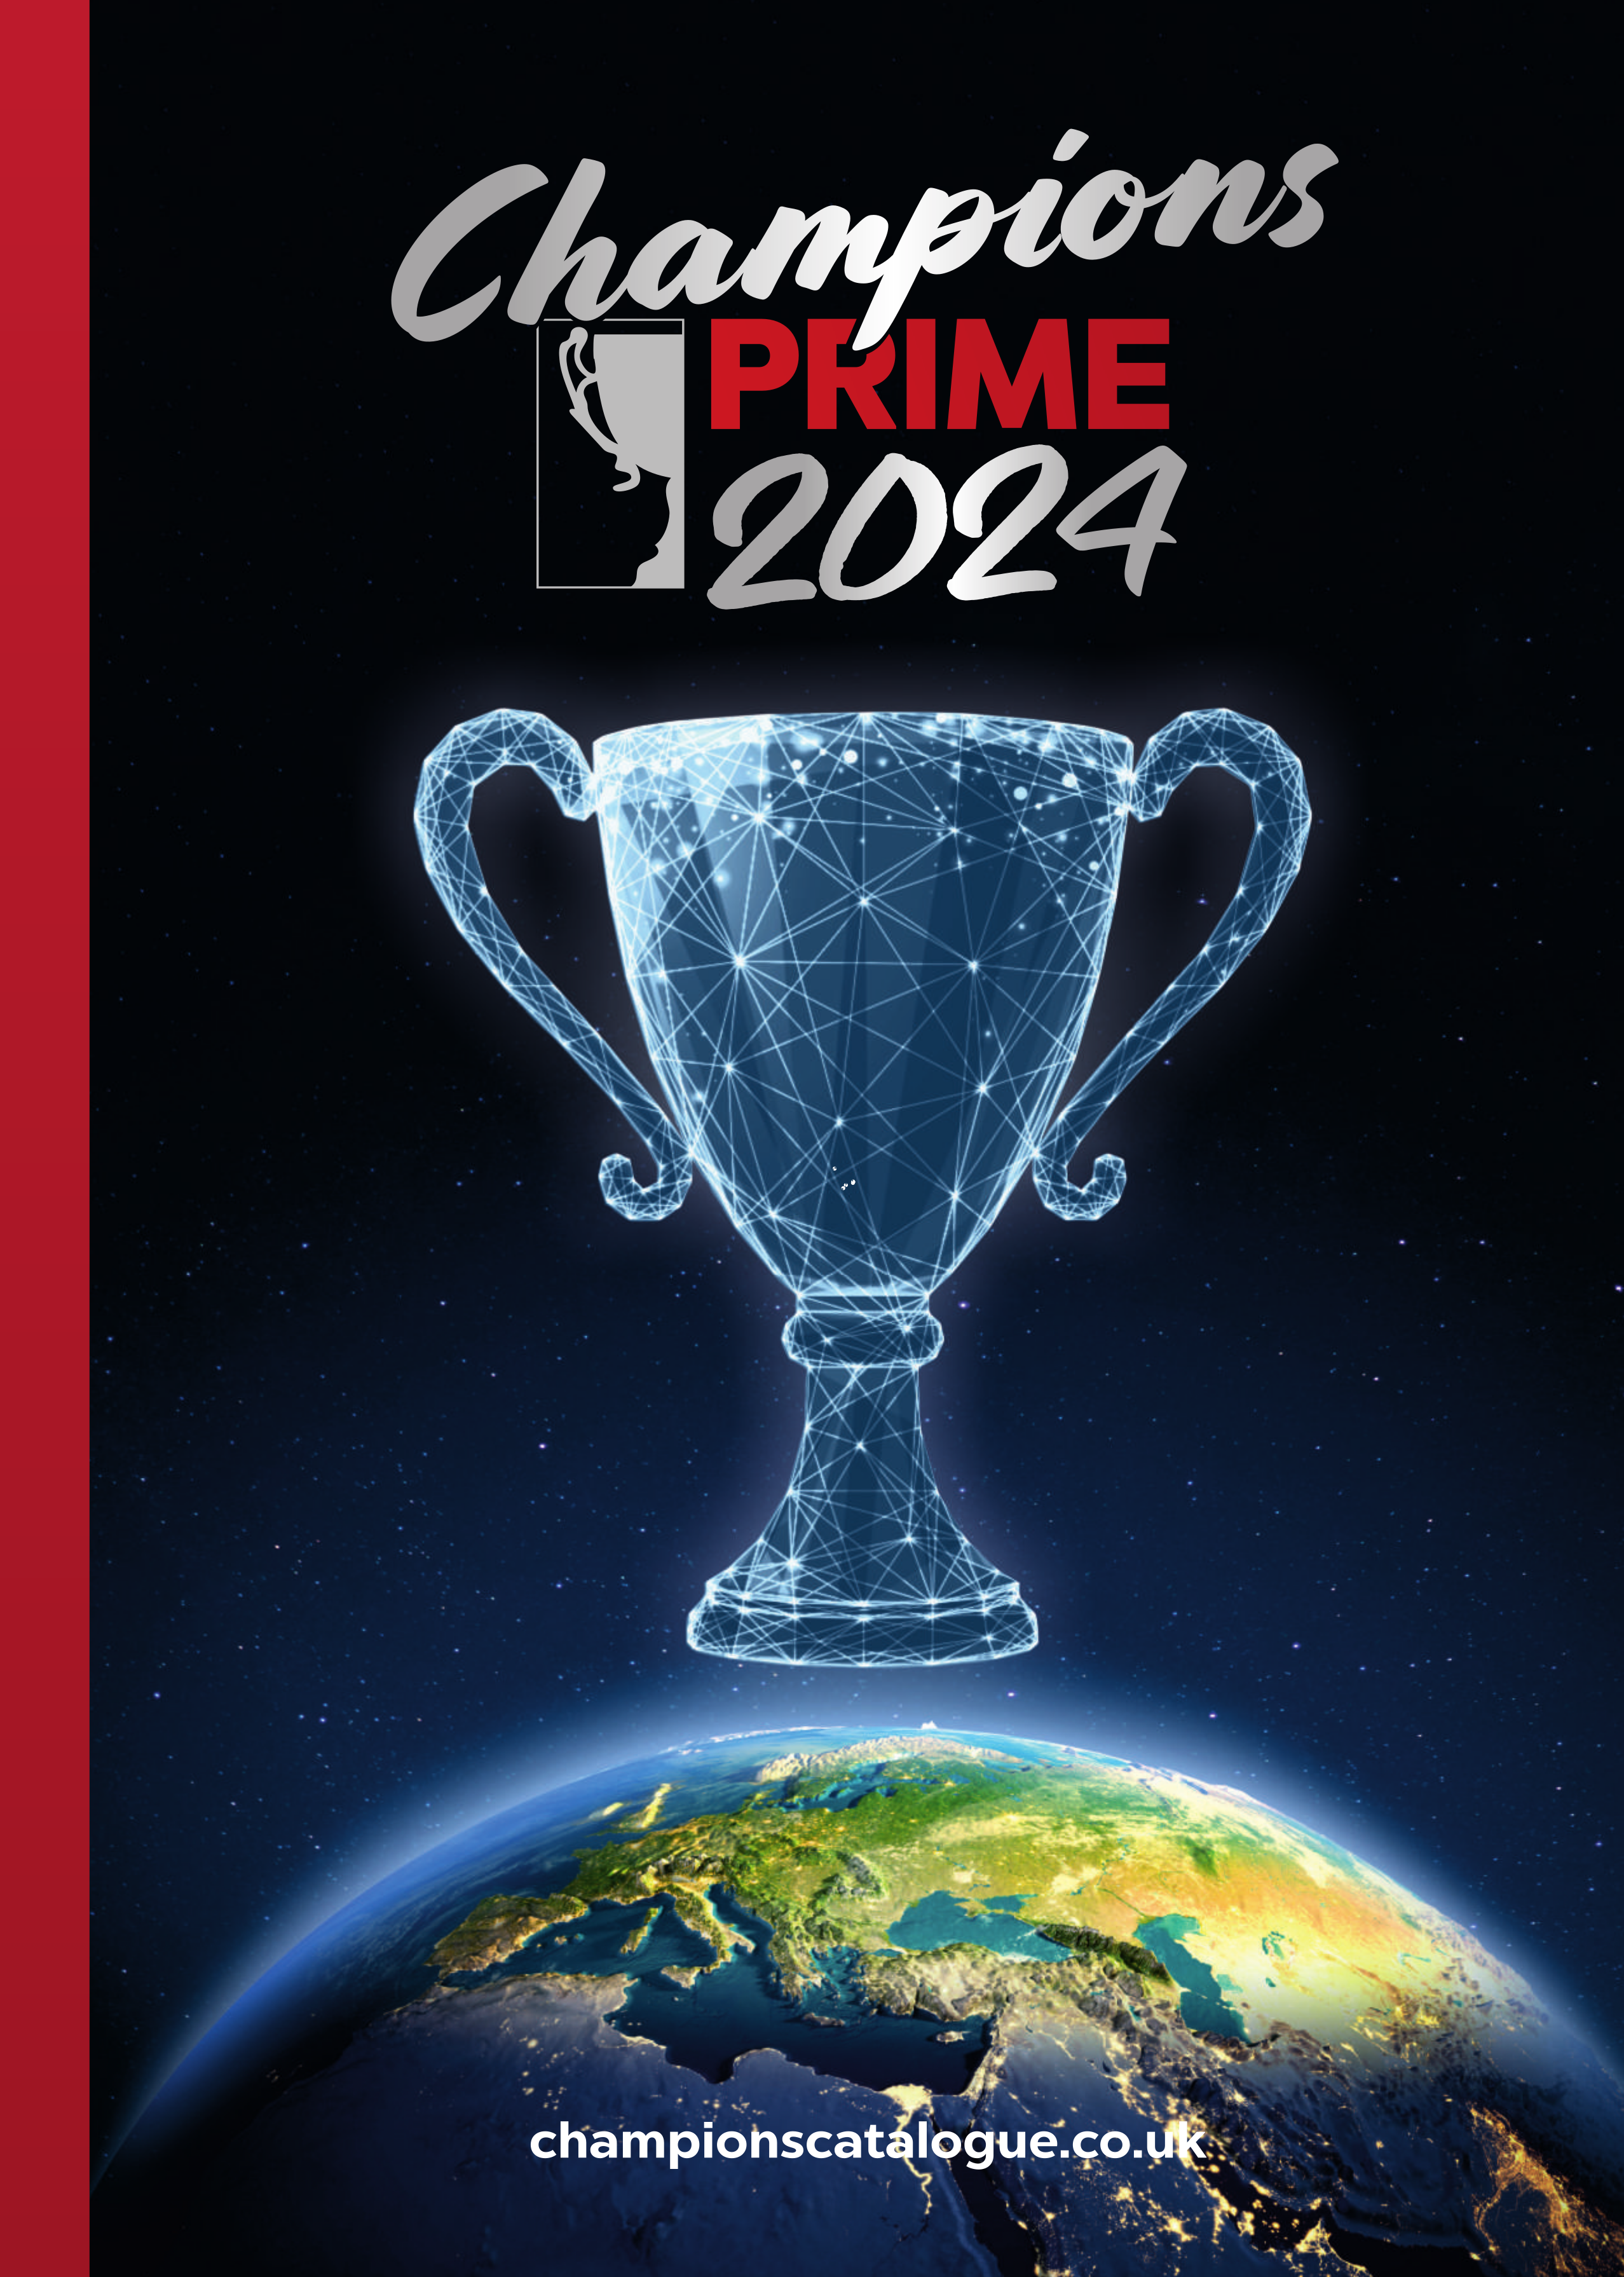 Champions Prime Catalogue 2024